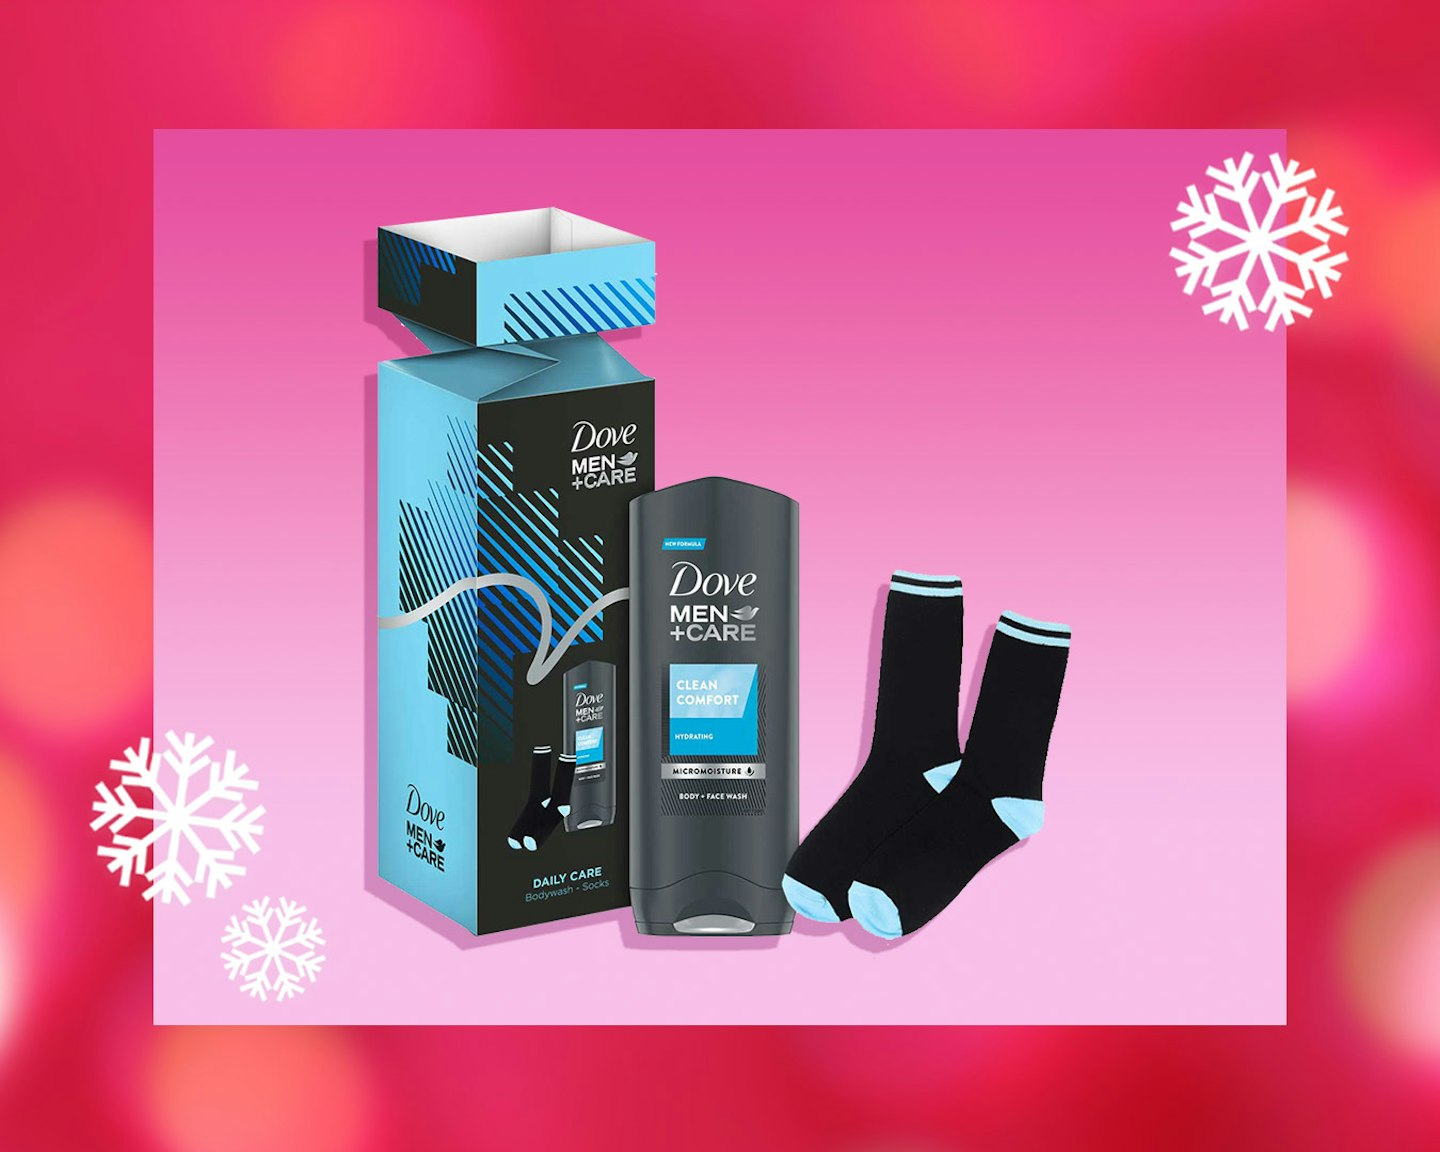 Dove Men+Care Body Wash & Socks Daily Care Gift Set